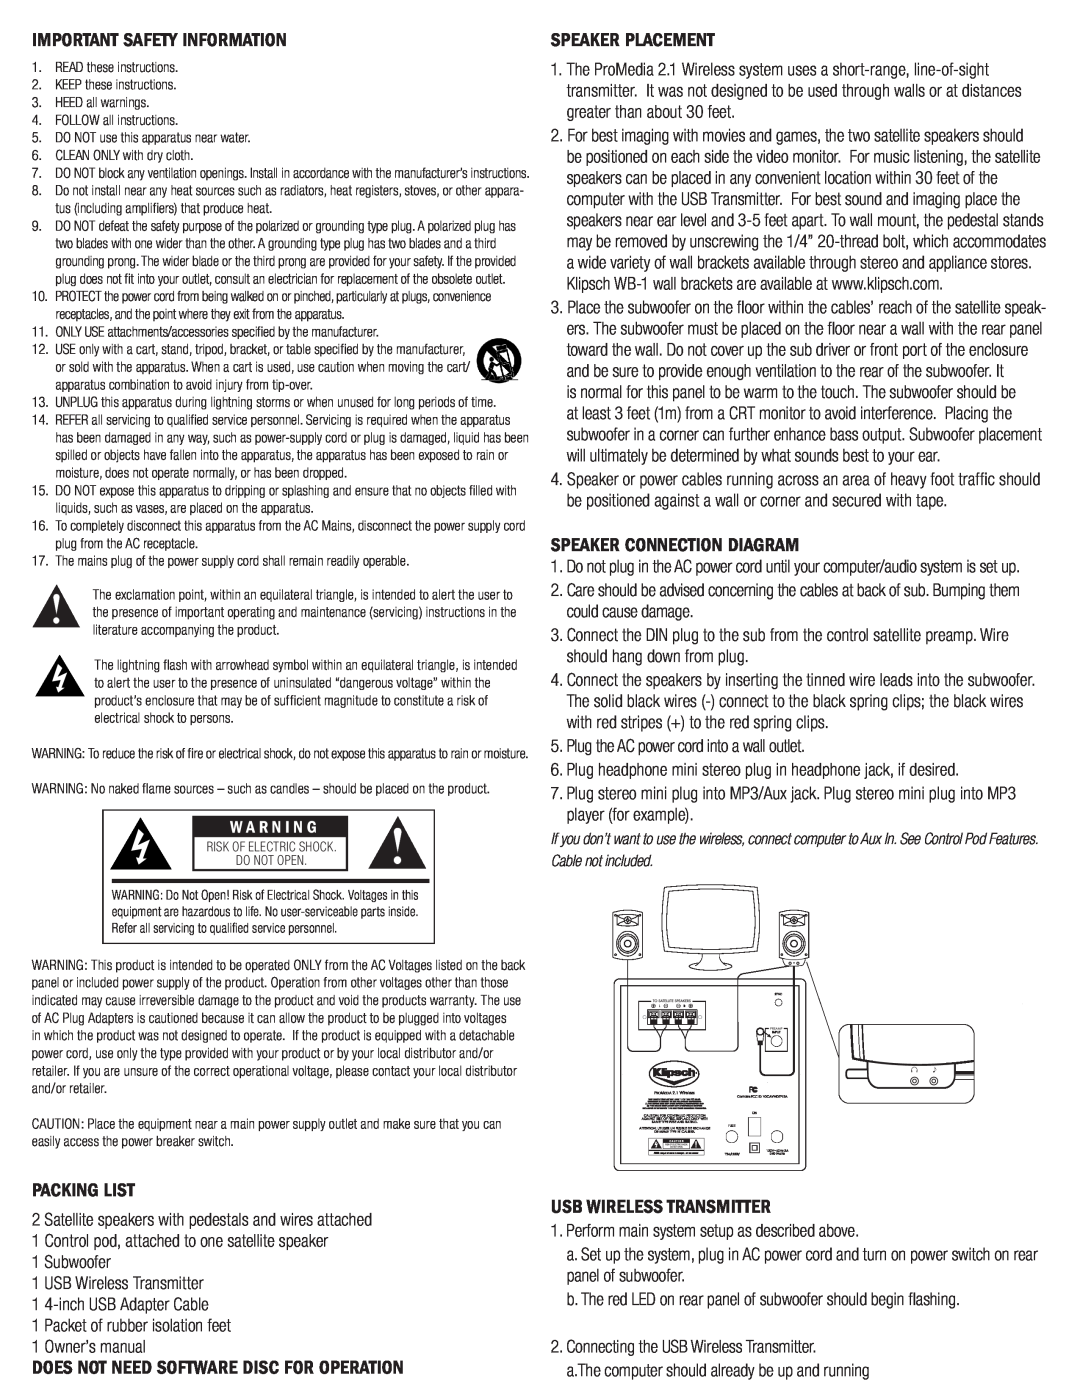 Klipsch 2.1 Important Safety Information, Speaker Placement, Speaker Connection Diagram, Packing List, W A R N I N G 